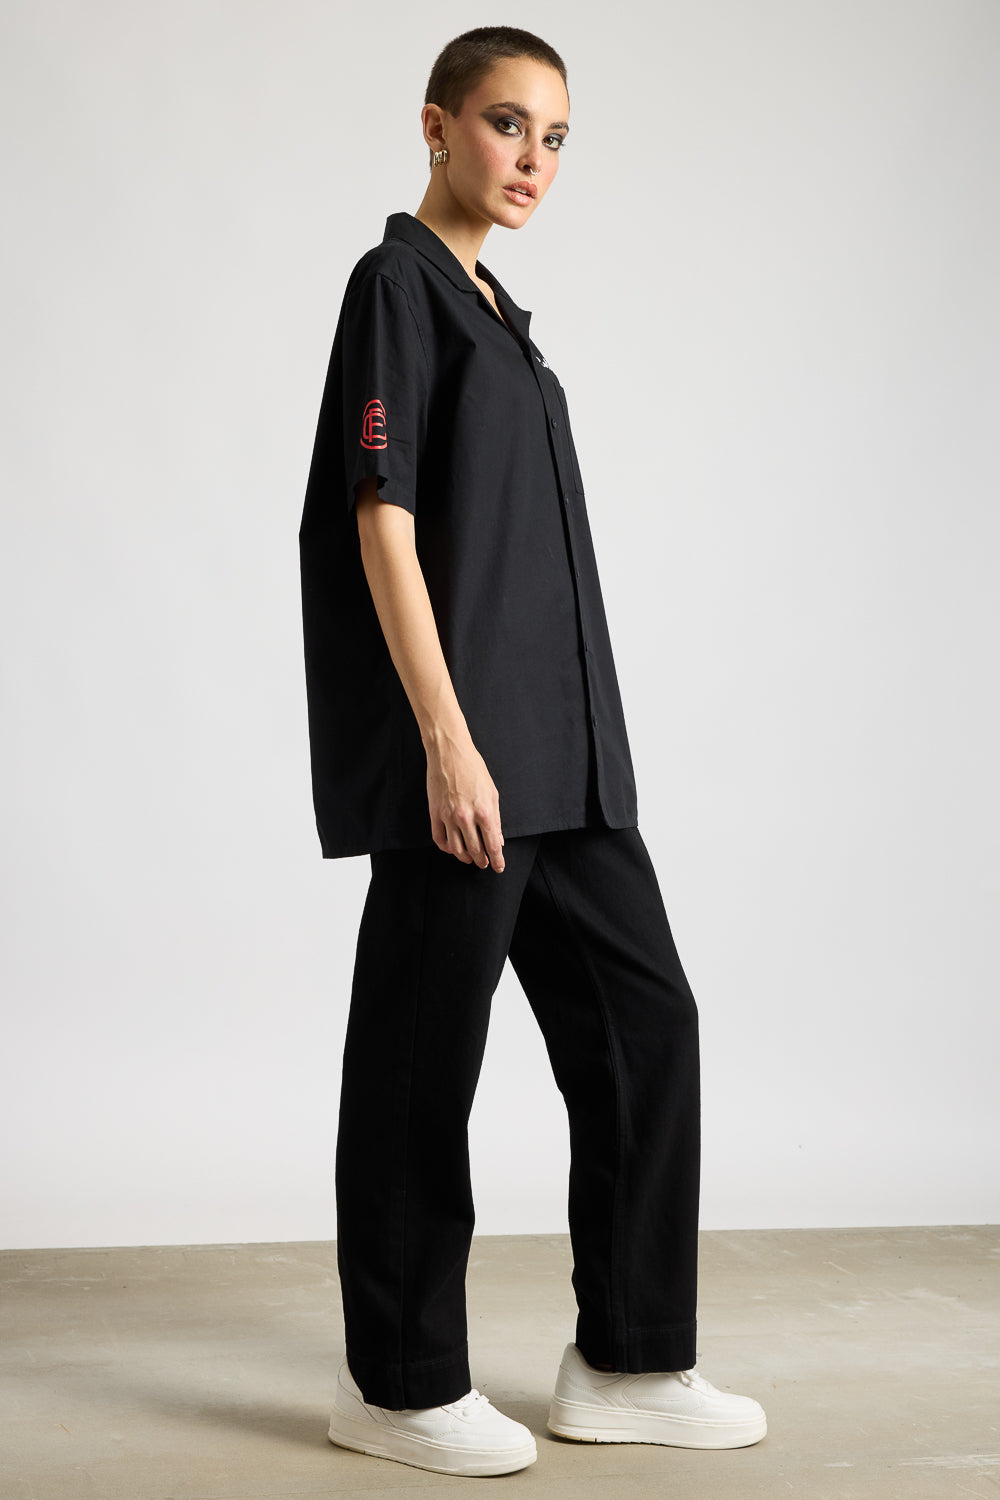 Cotton Poplin Women's Garage Shirt - Classic Black